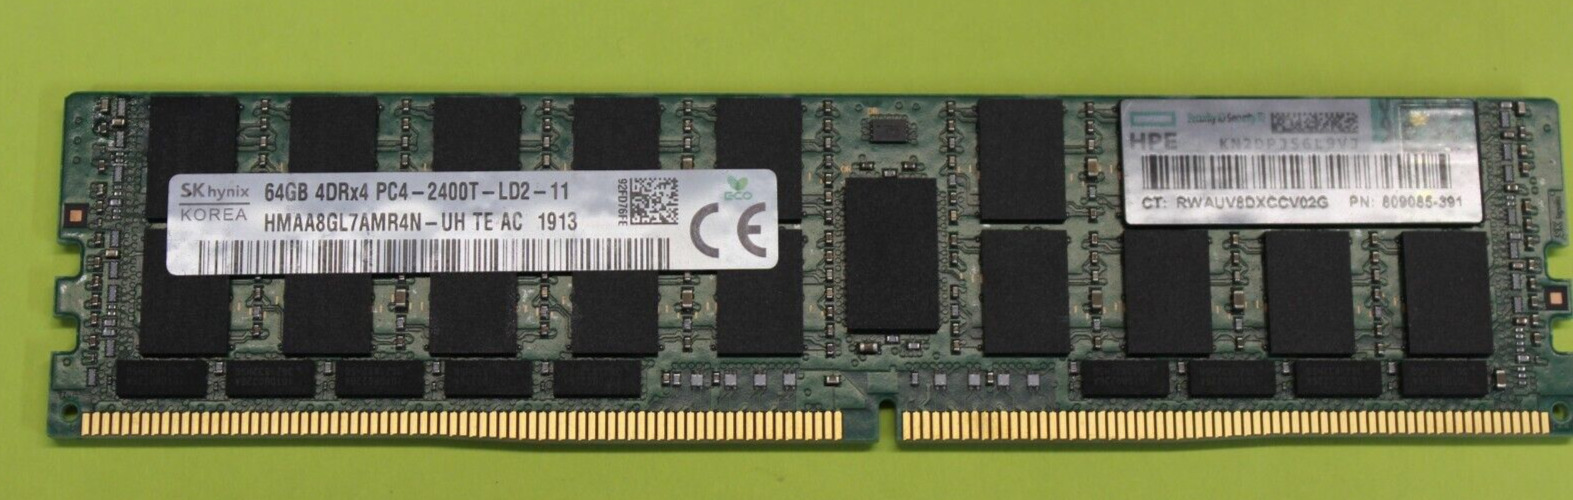 SK hynix 64GB 4DRx4 PC4-2400T-LD2-11 Server Ram LOT of (8)